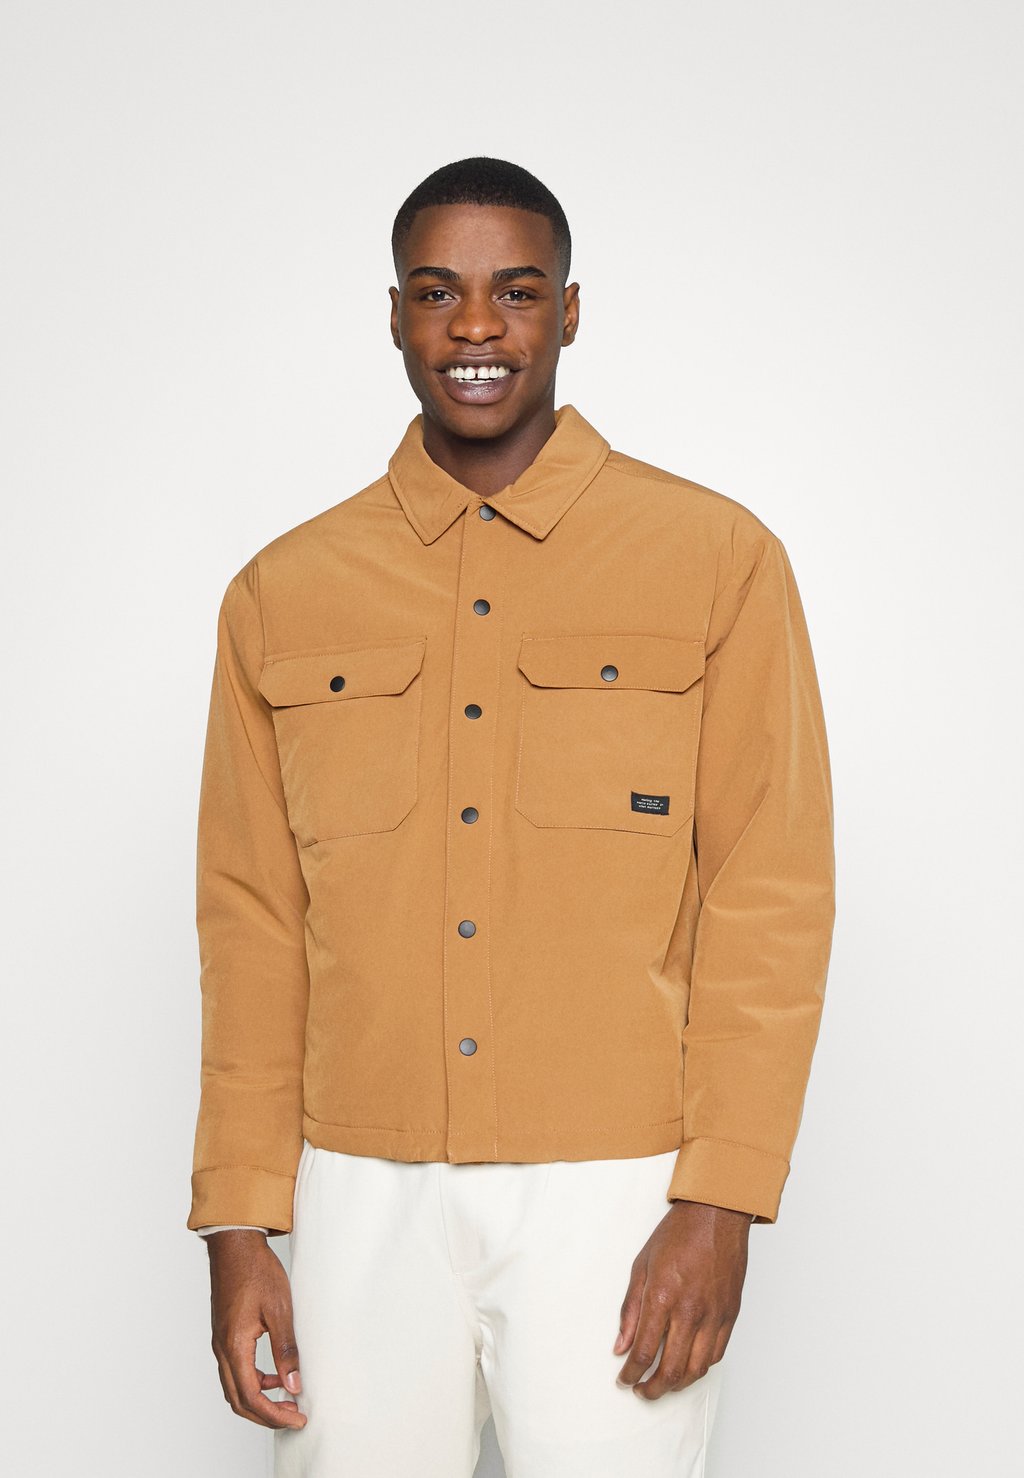 Демисезонная куртка Blend, коричневый куртка befree демисезонная размер s коричневый